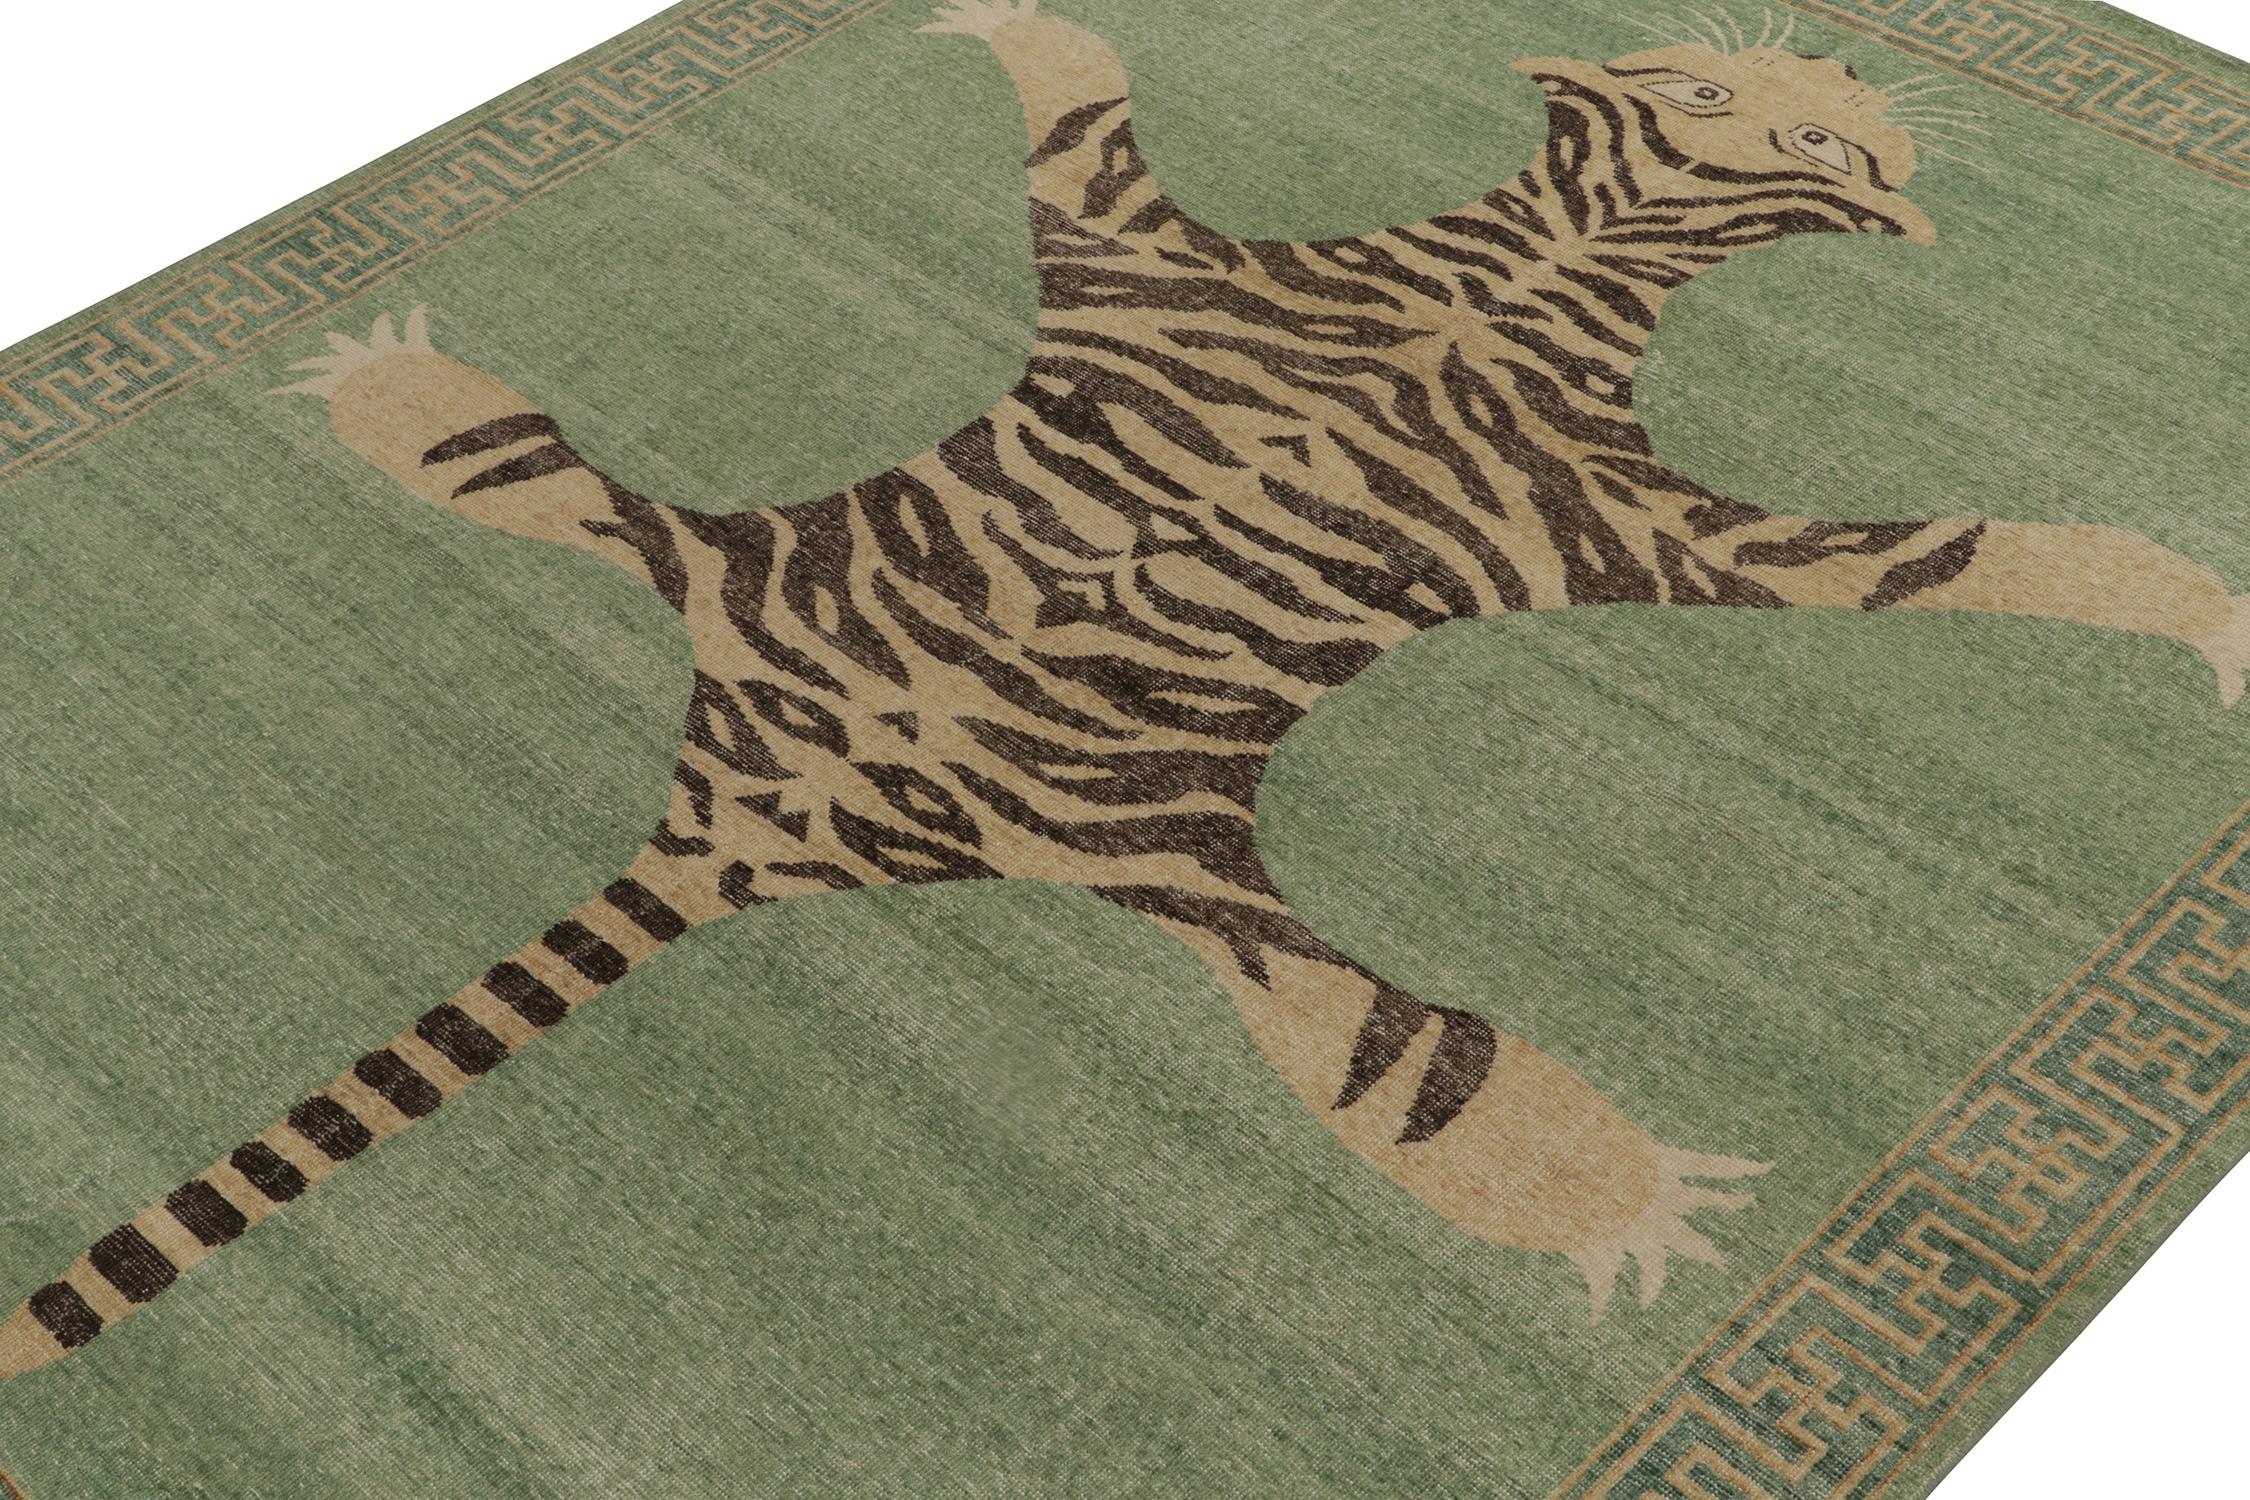 Indian Rug & Kilim’s Distressed Tiger Skin Style Rug in Green, Beige & Black Pictorial For Sale